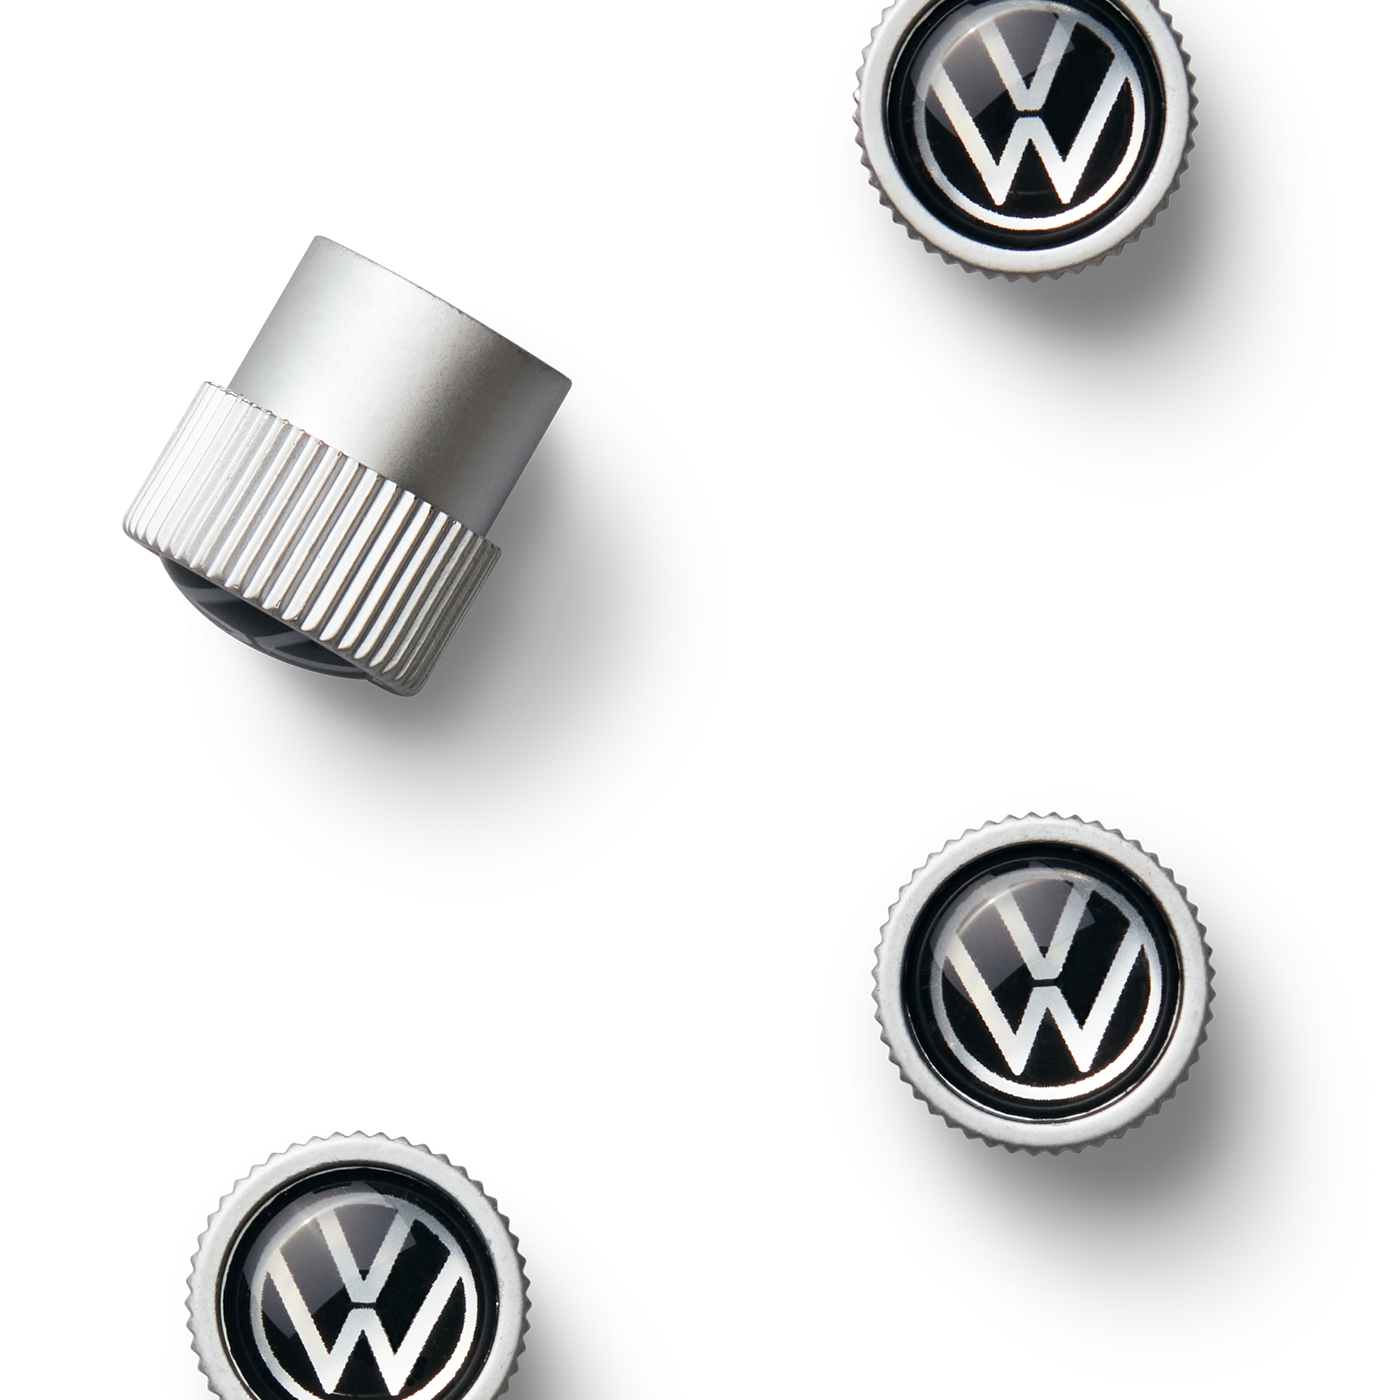 VW Volkswagen Logo Valves Stems Caps Chrome Wheels Roundel Car Tires Emblem Rims 